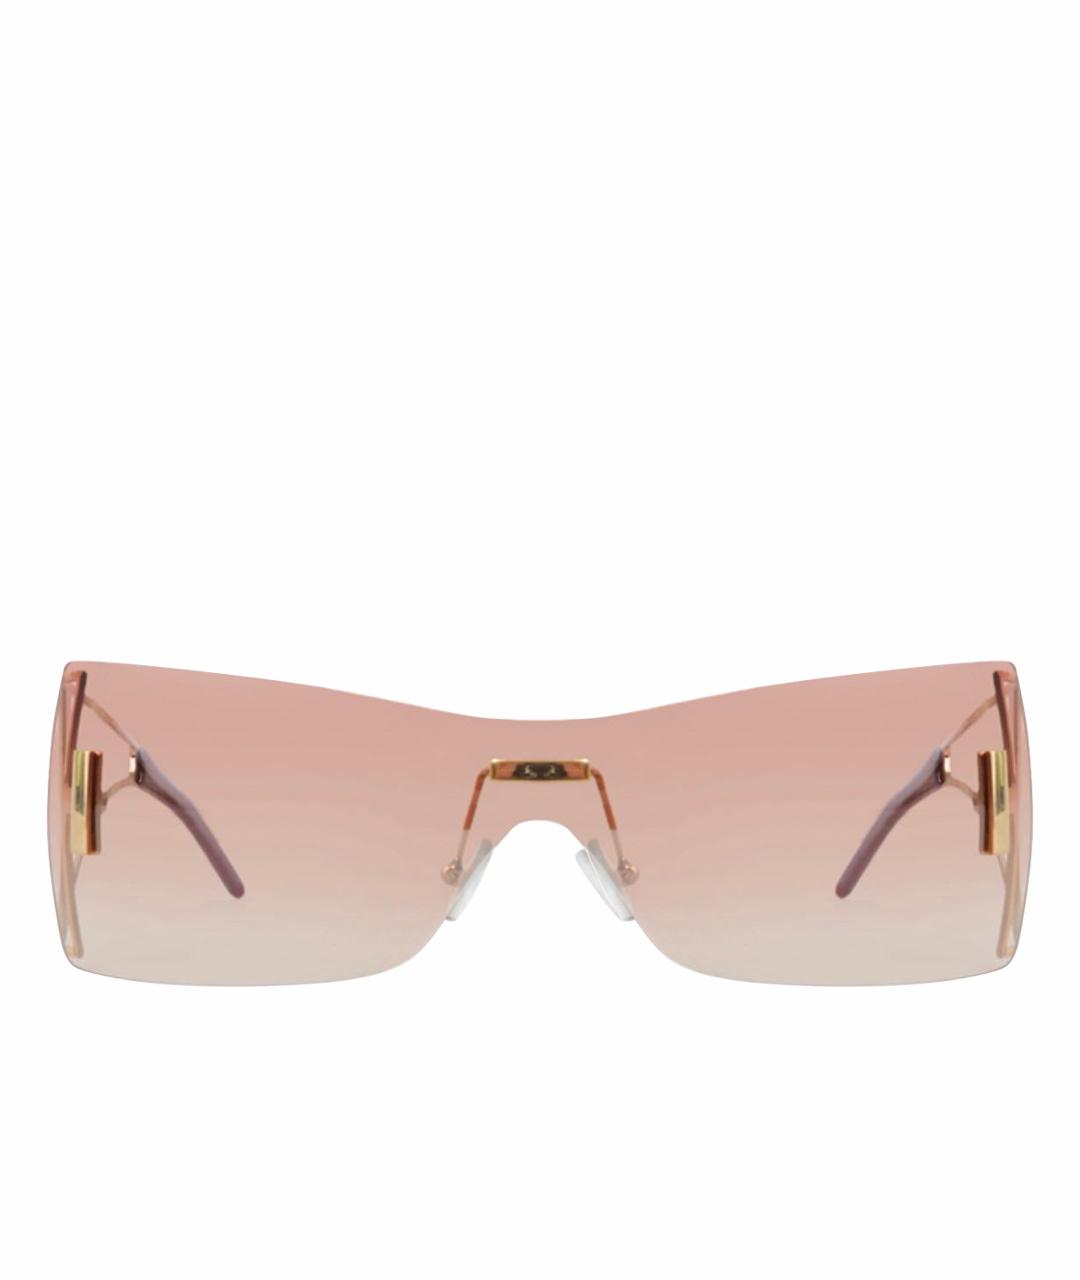 GIANFRANCO FERRE Розовые пластиковые солнцезащитные очки, фото 1